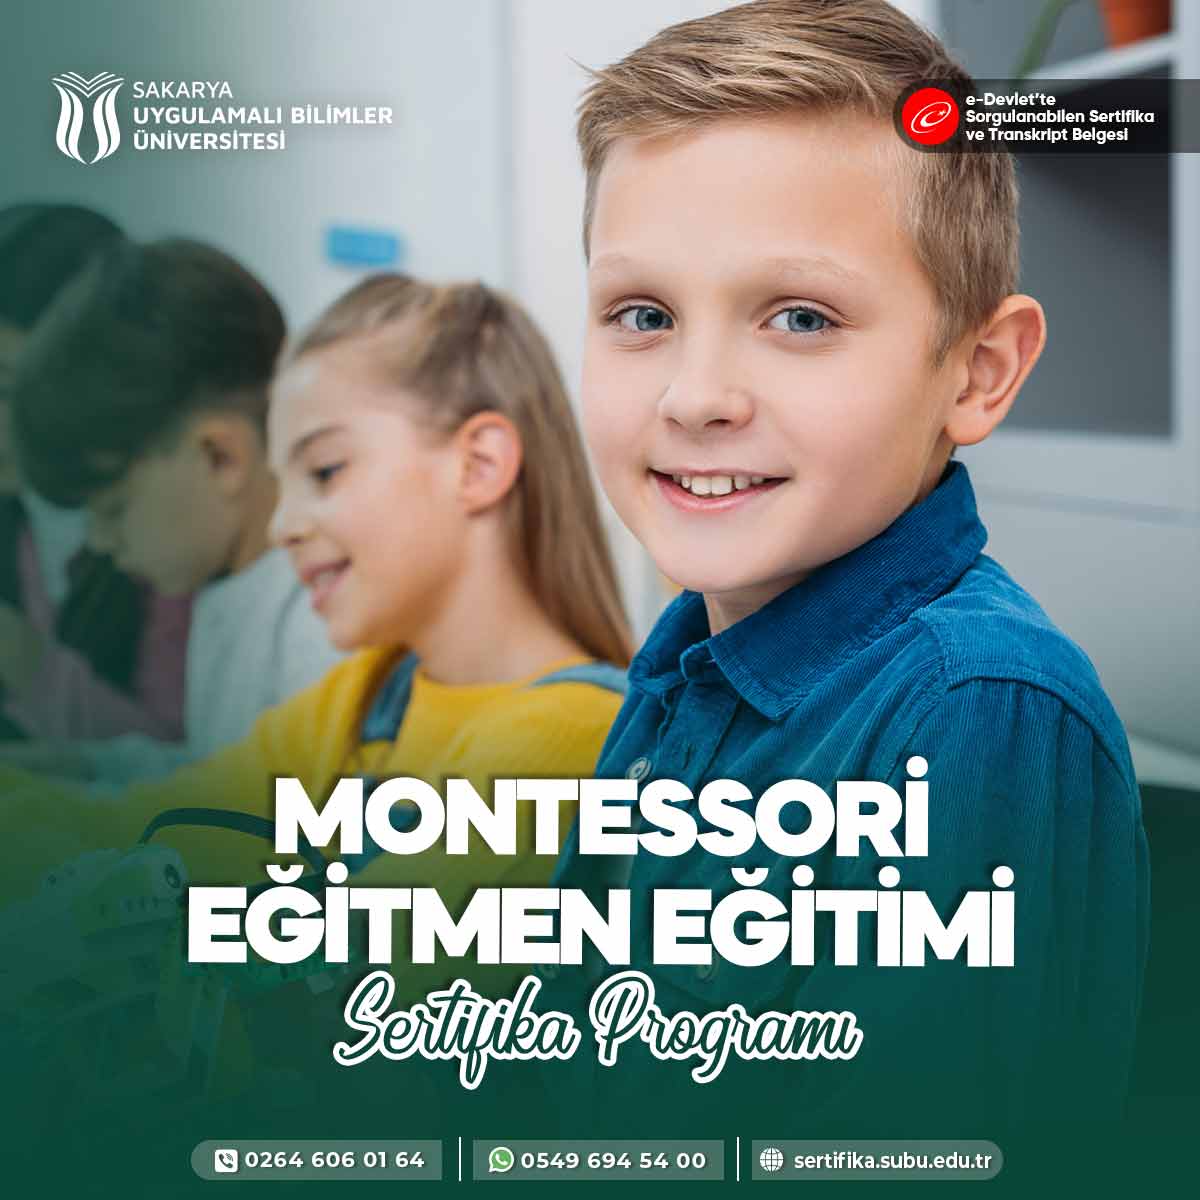 Montessori Eğitmen Eğitimi Sertifika Programı